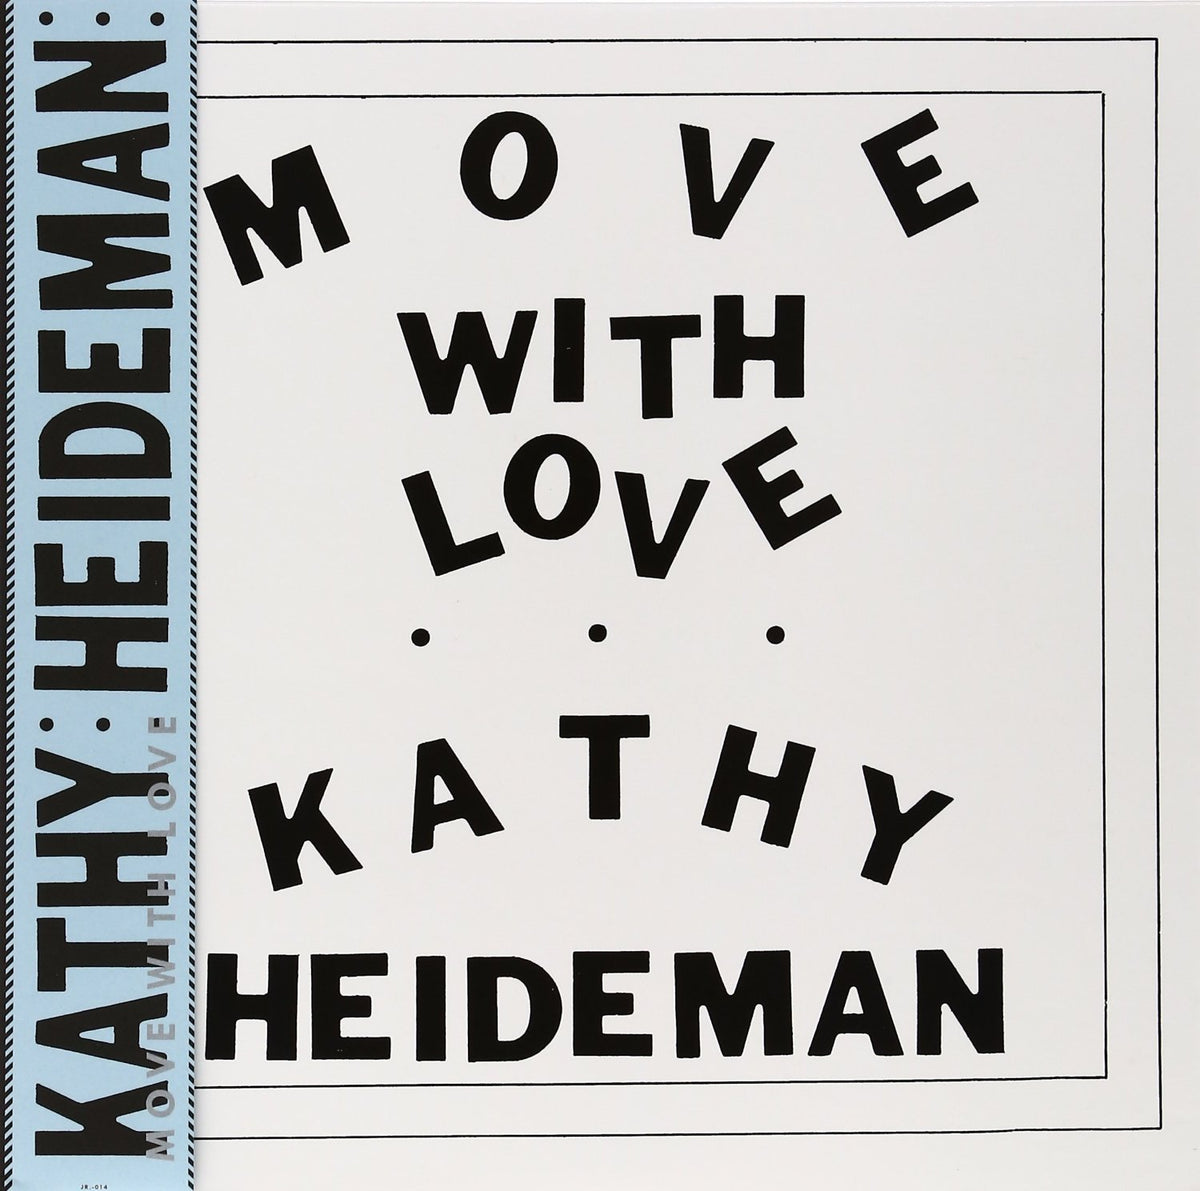 Kathy Heideman - Move With Love - Seaglass Vinyl